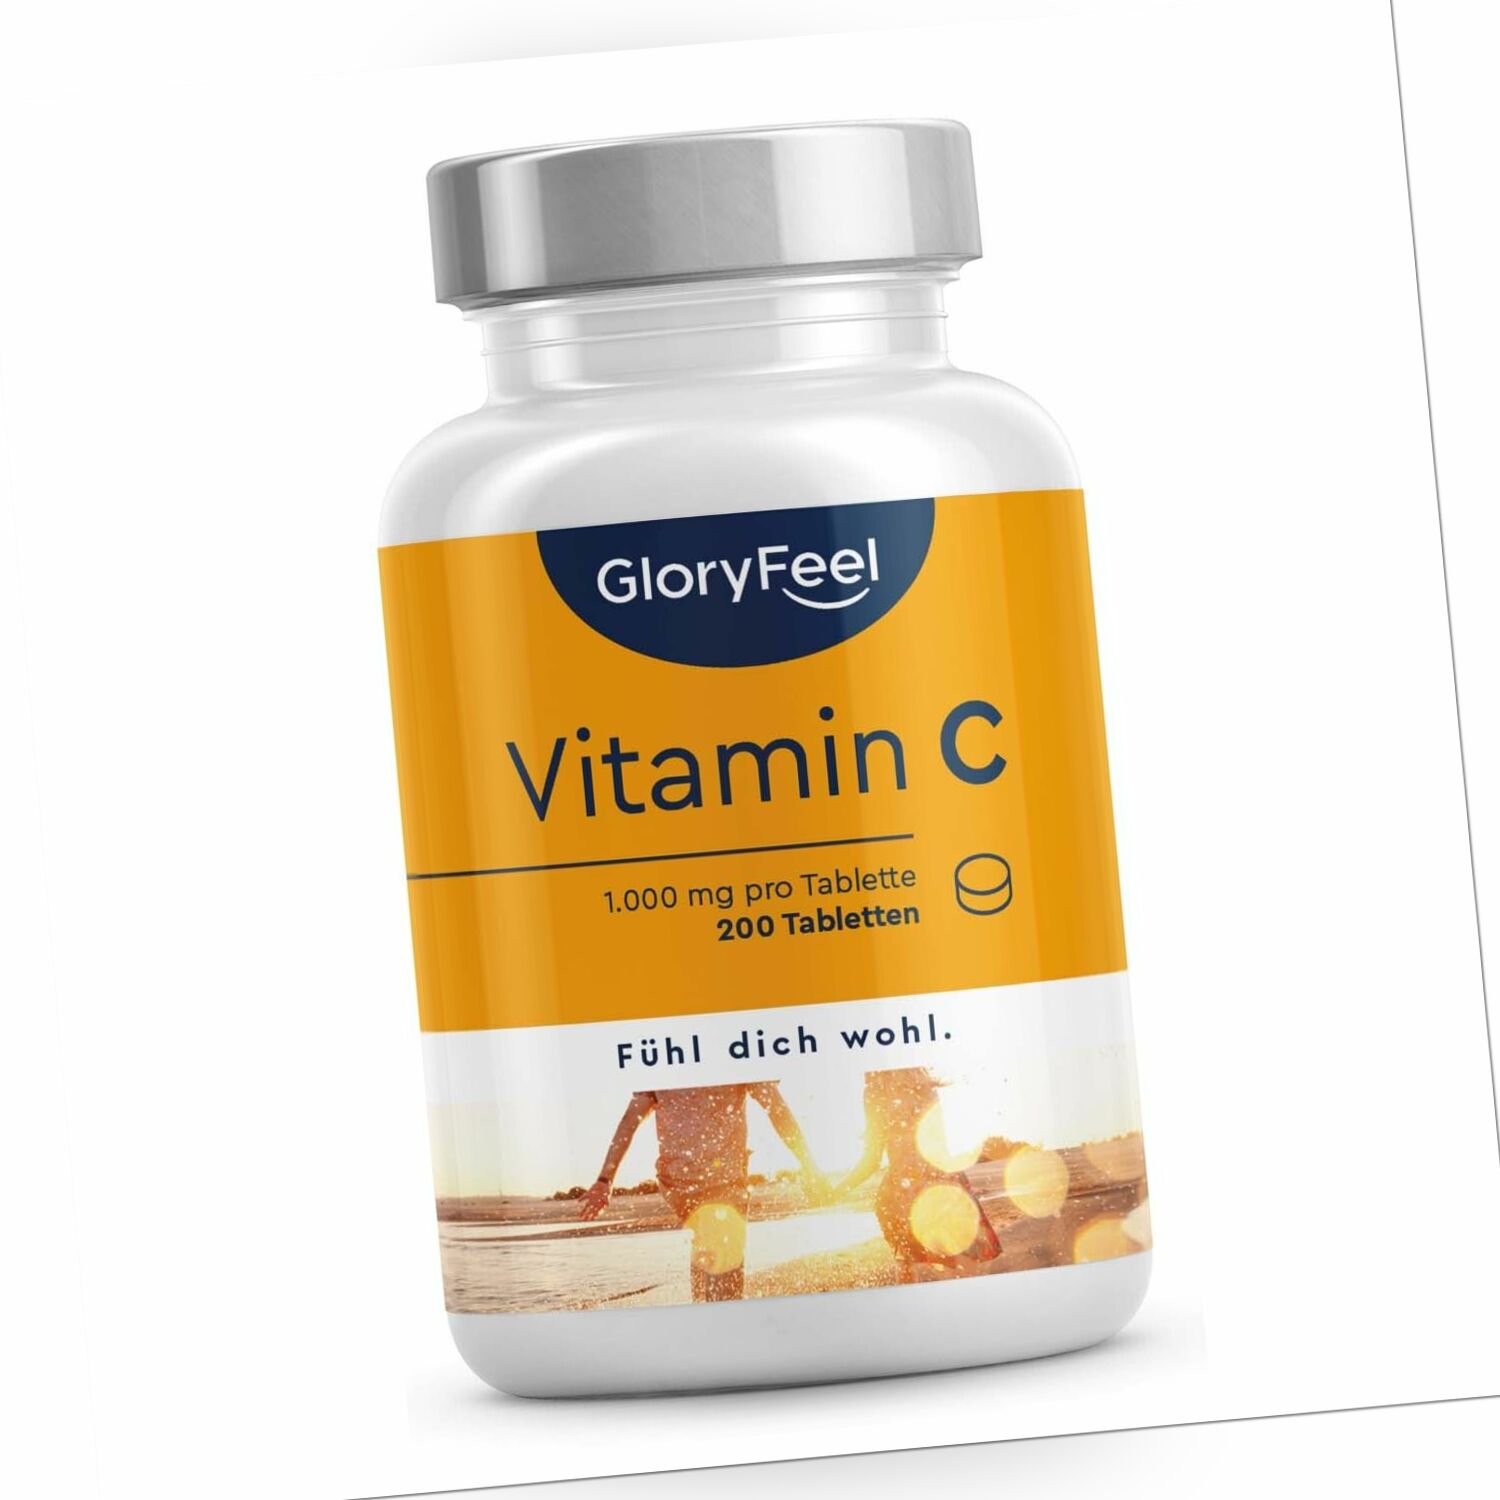 Vitamin C 1000 mg pro Tablette - Immun-Support - 200 Tabletten  für 7 Monate